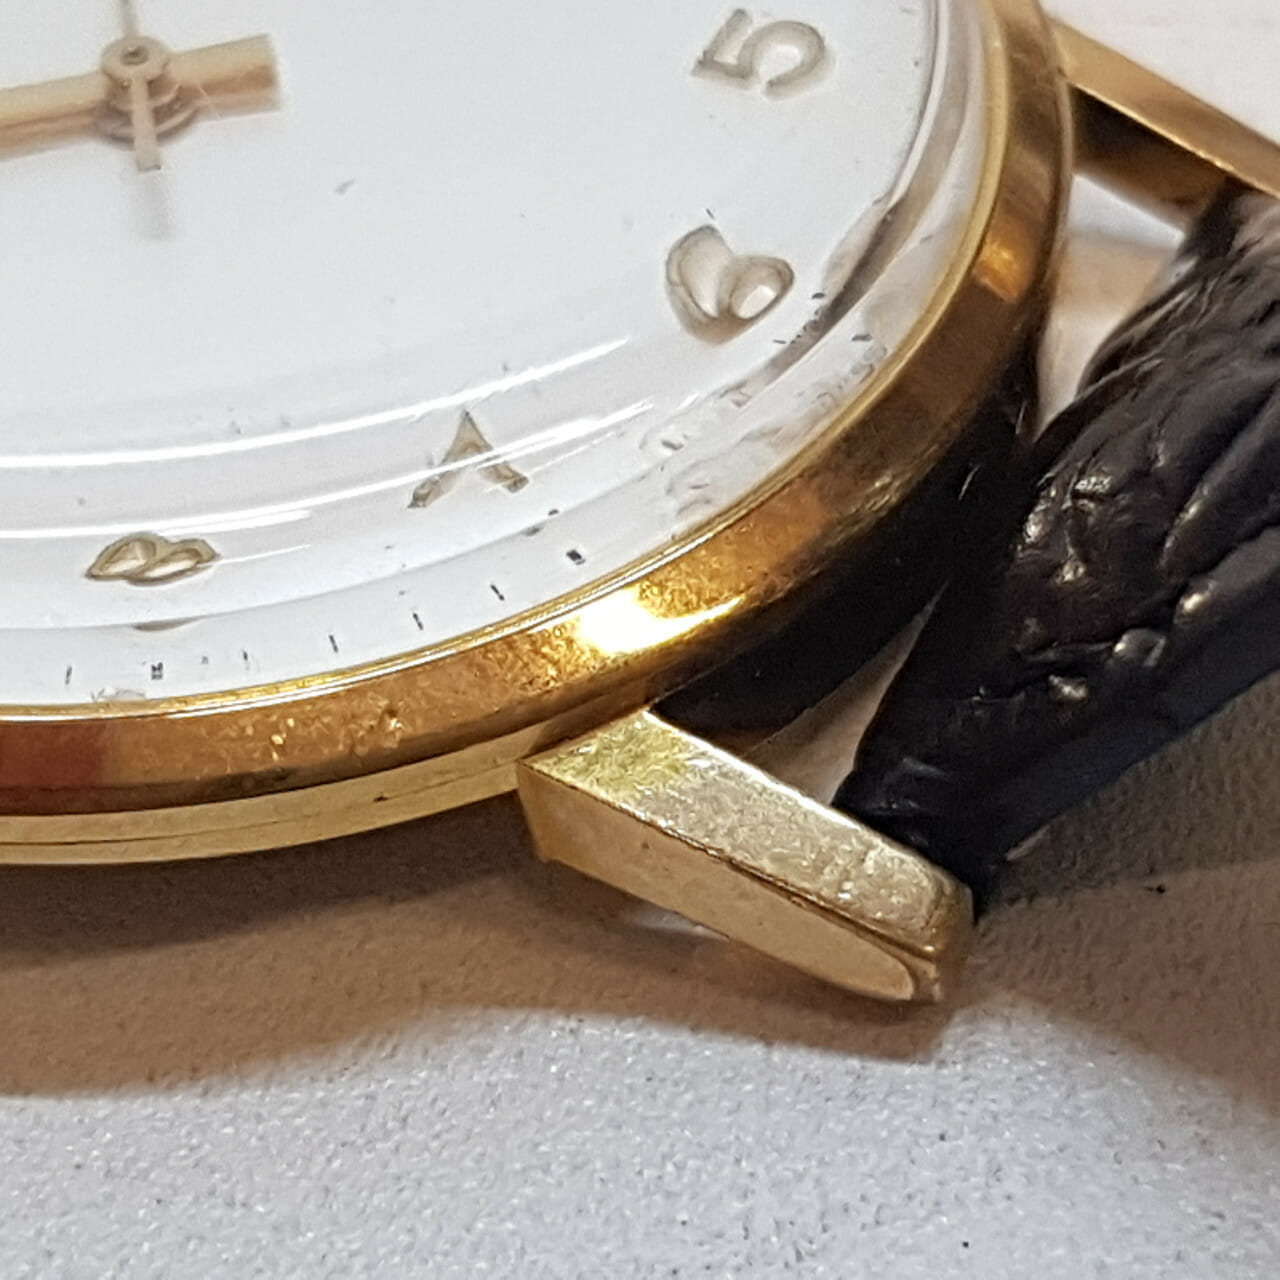 Vintage Doxa Manual Watch C4903